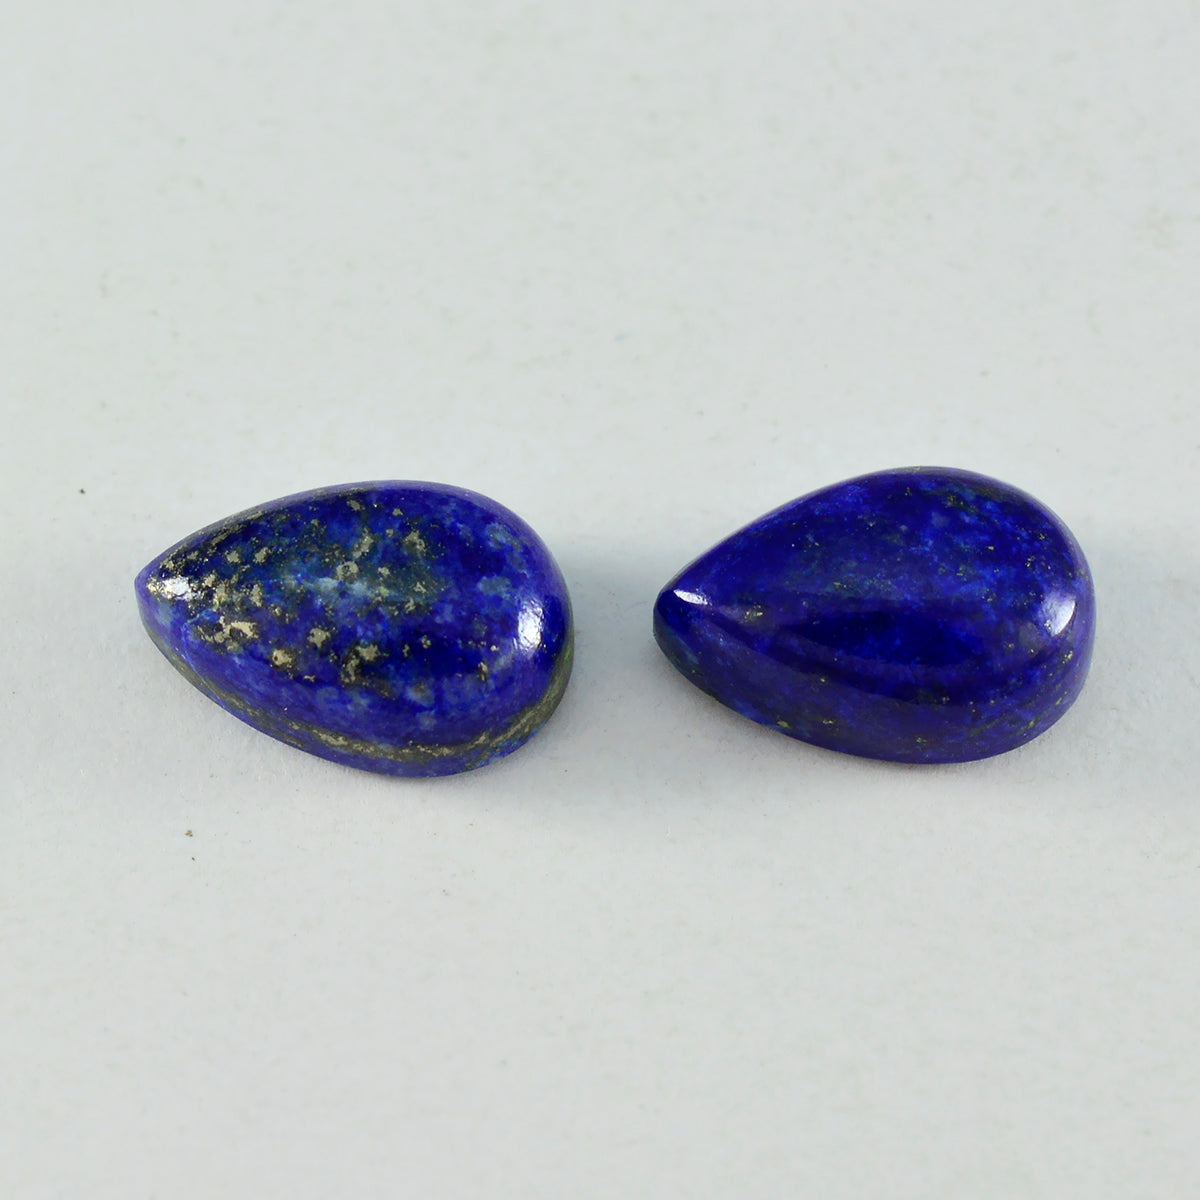 Riyogems 1PC Blue Lapis Lazuli Cabochon 12x16 mm Pear Shape attractive Quality Gems